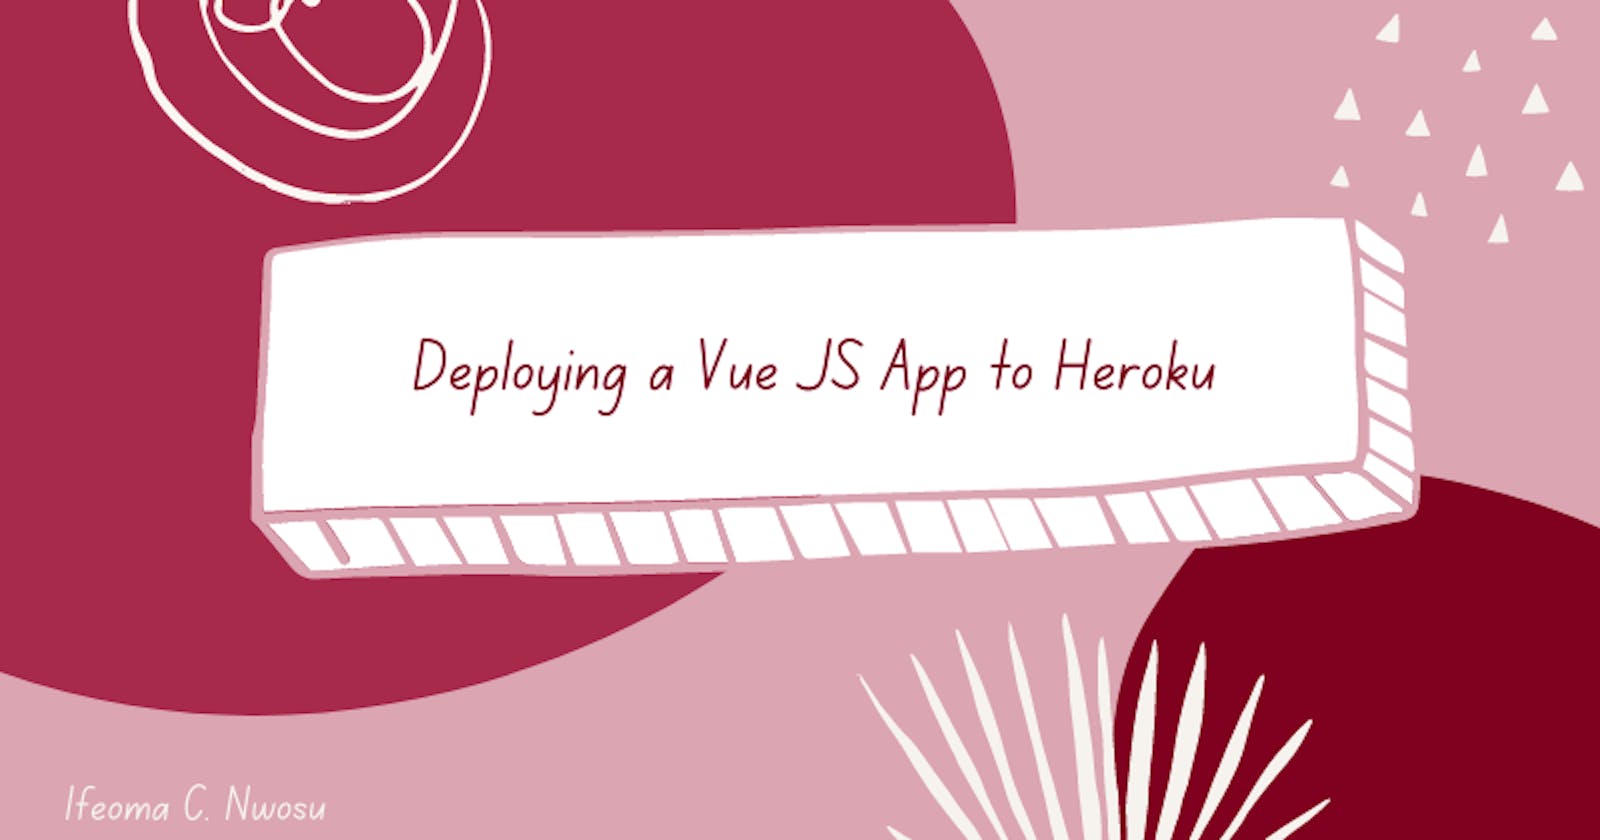 Deploying a Vue JS app to Heroku